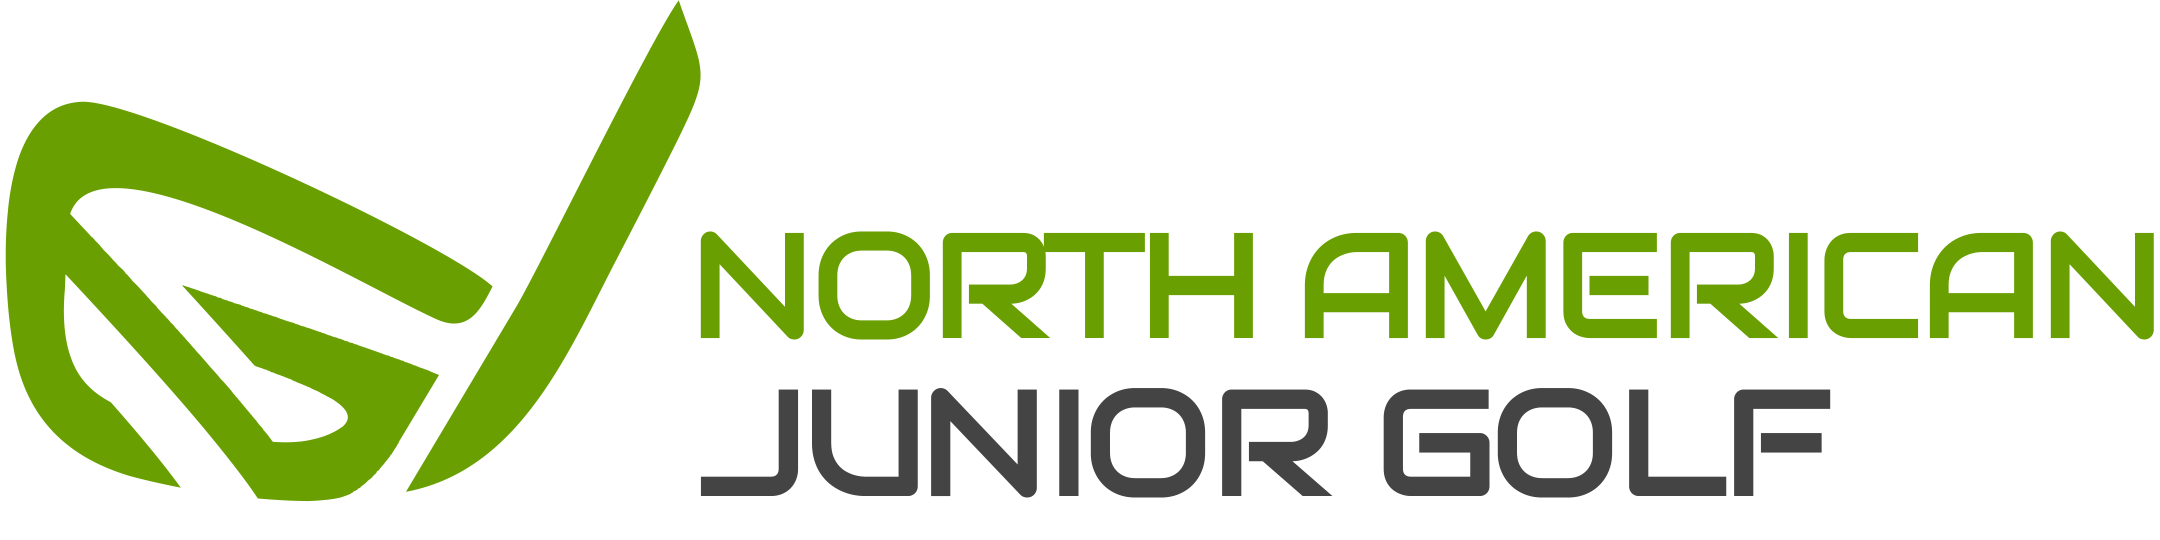 North American Junior Golf Tournaments